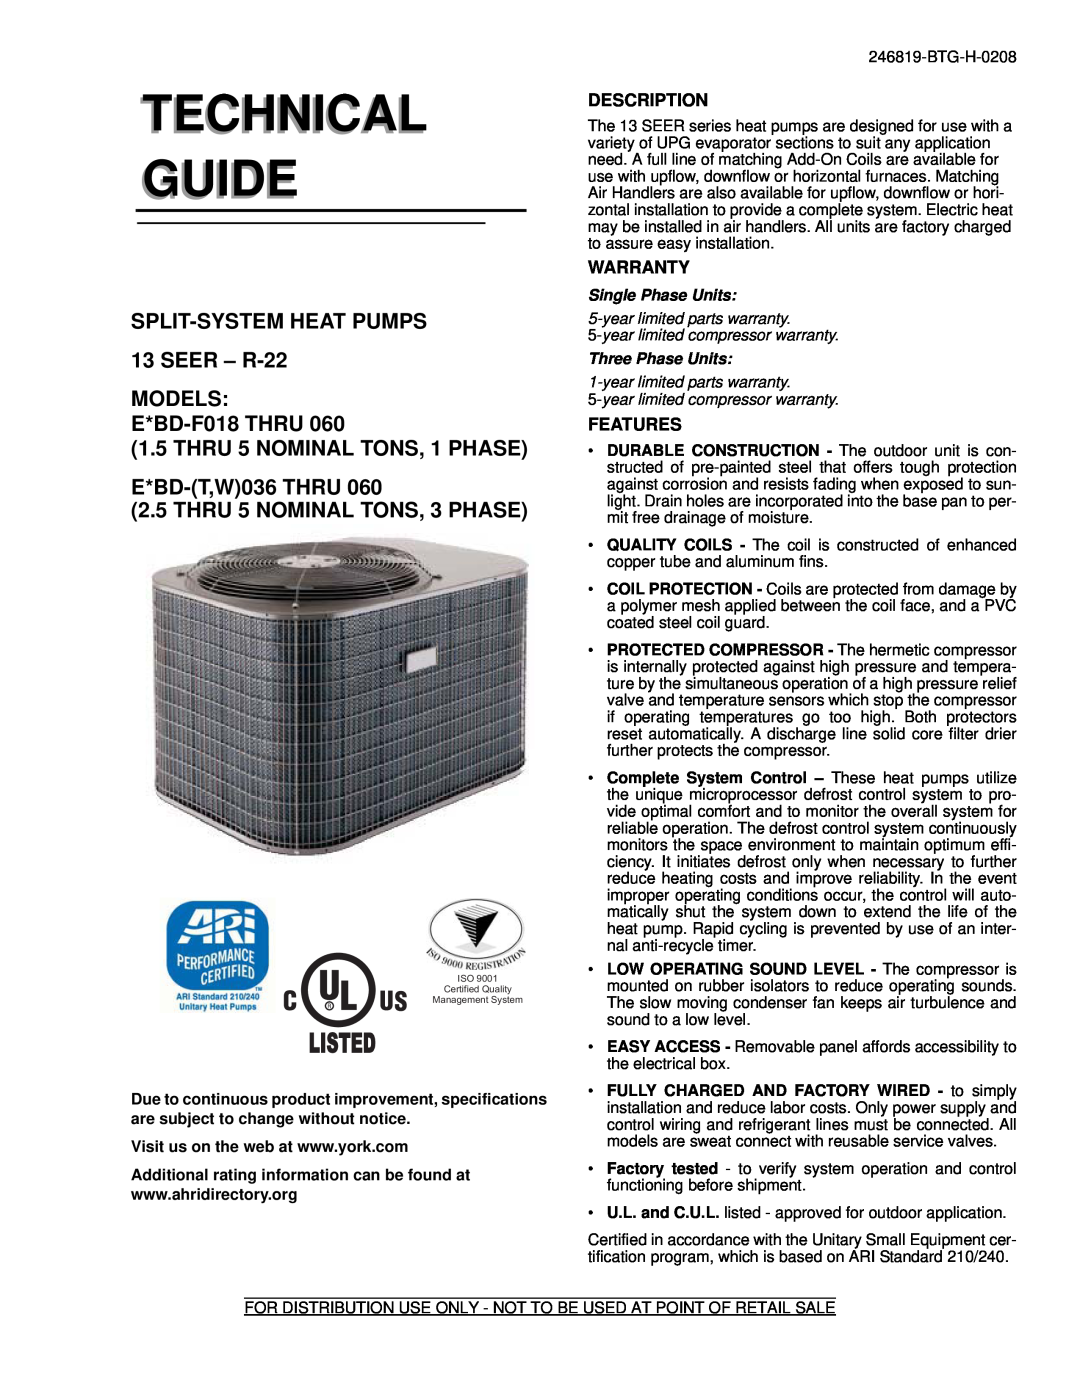 York E*BD-F018 THRU 060, E*BD-(T warranty Description, Warranty, Features, Technical Guide, Listed, MODELS E*BD-F018THRU 